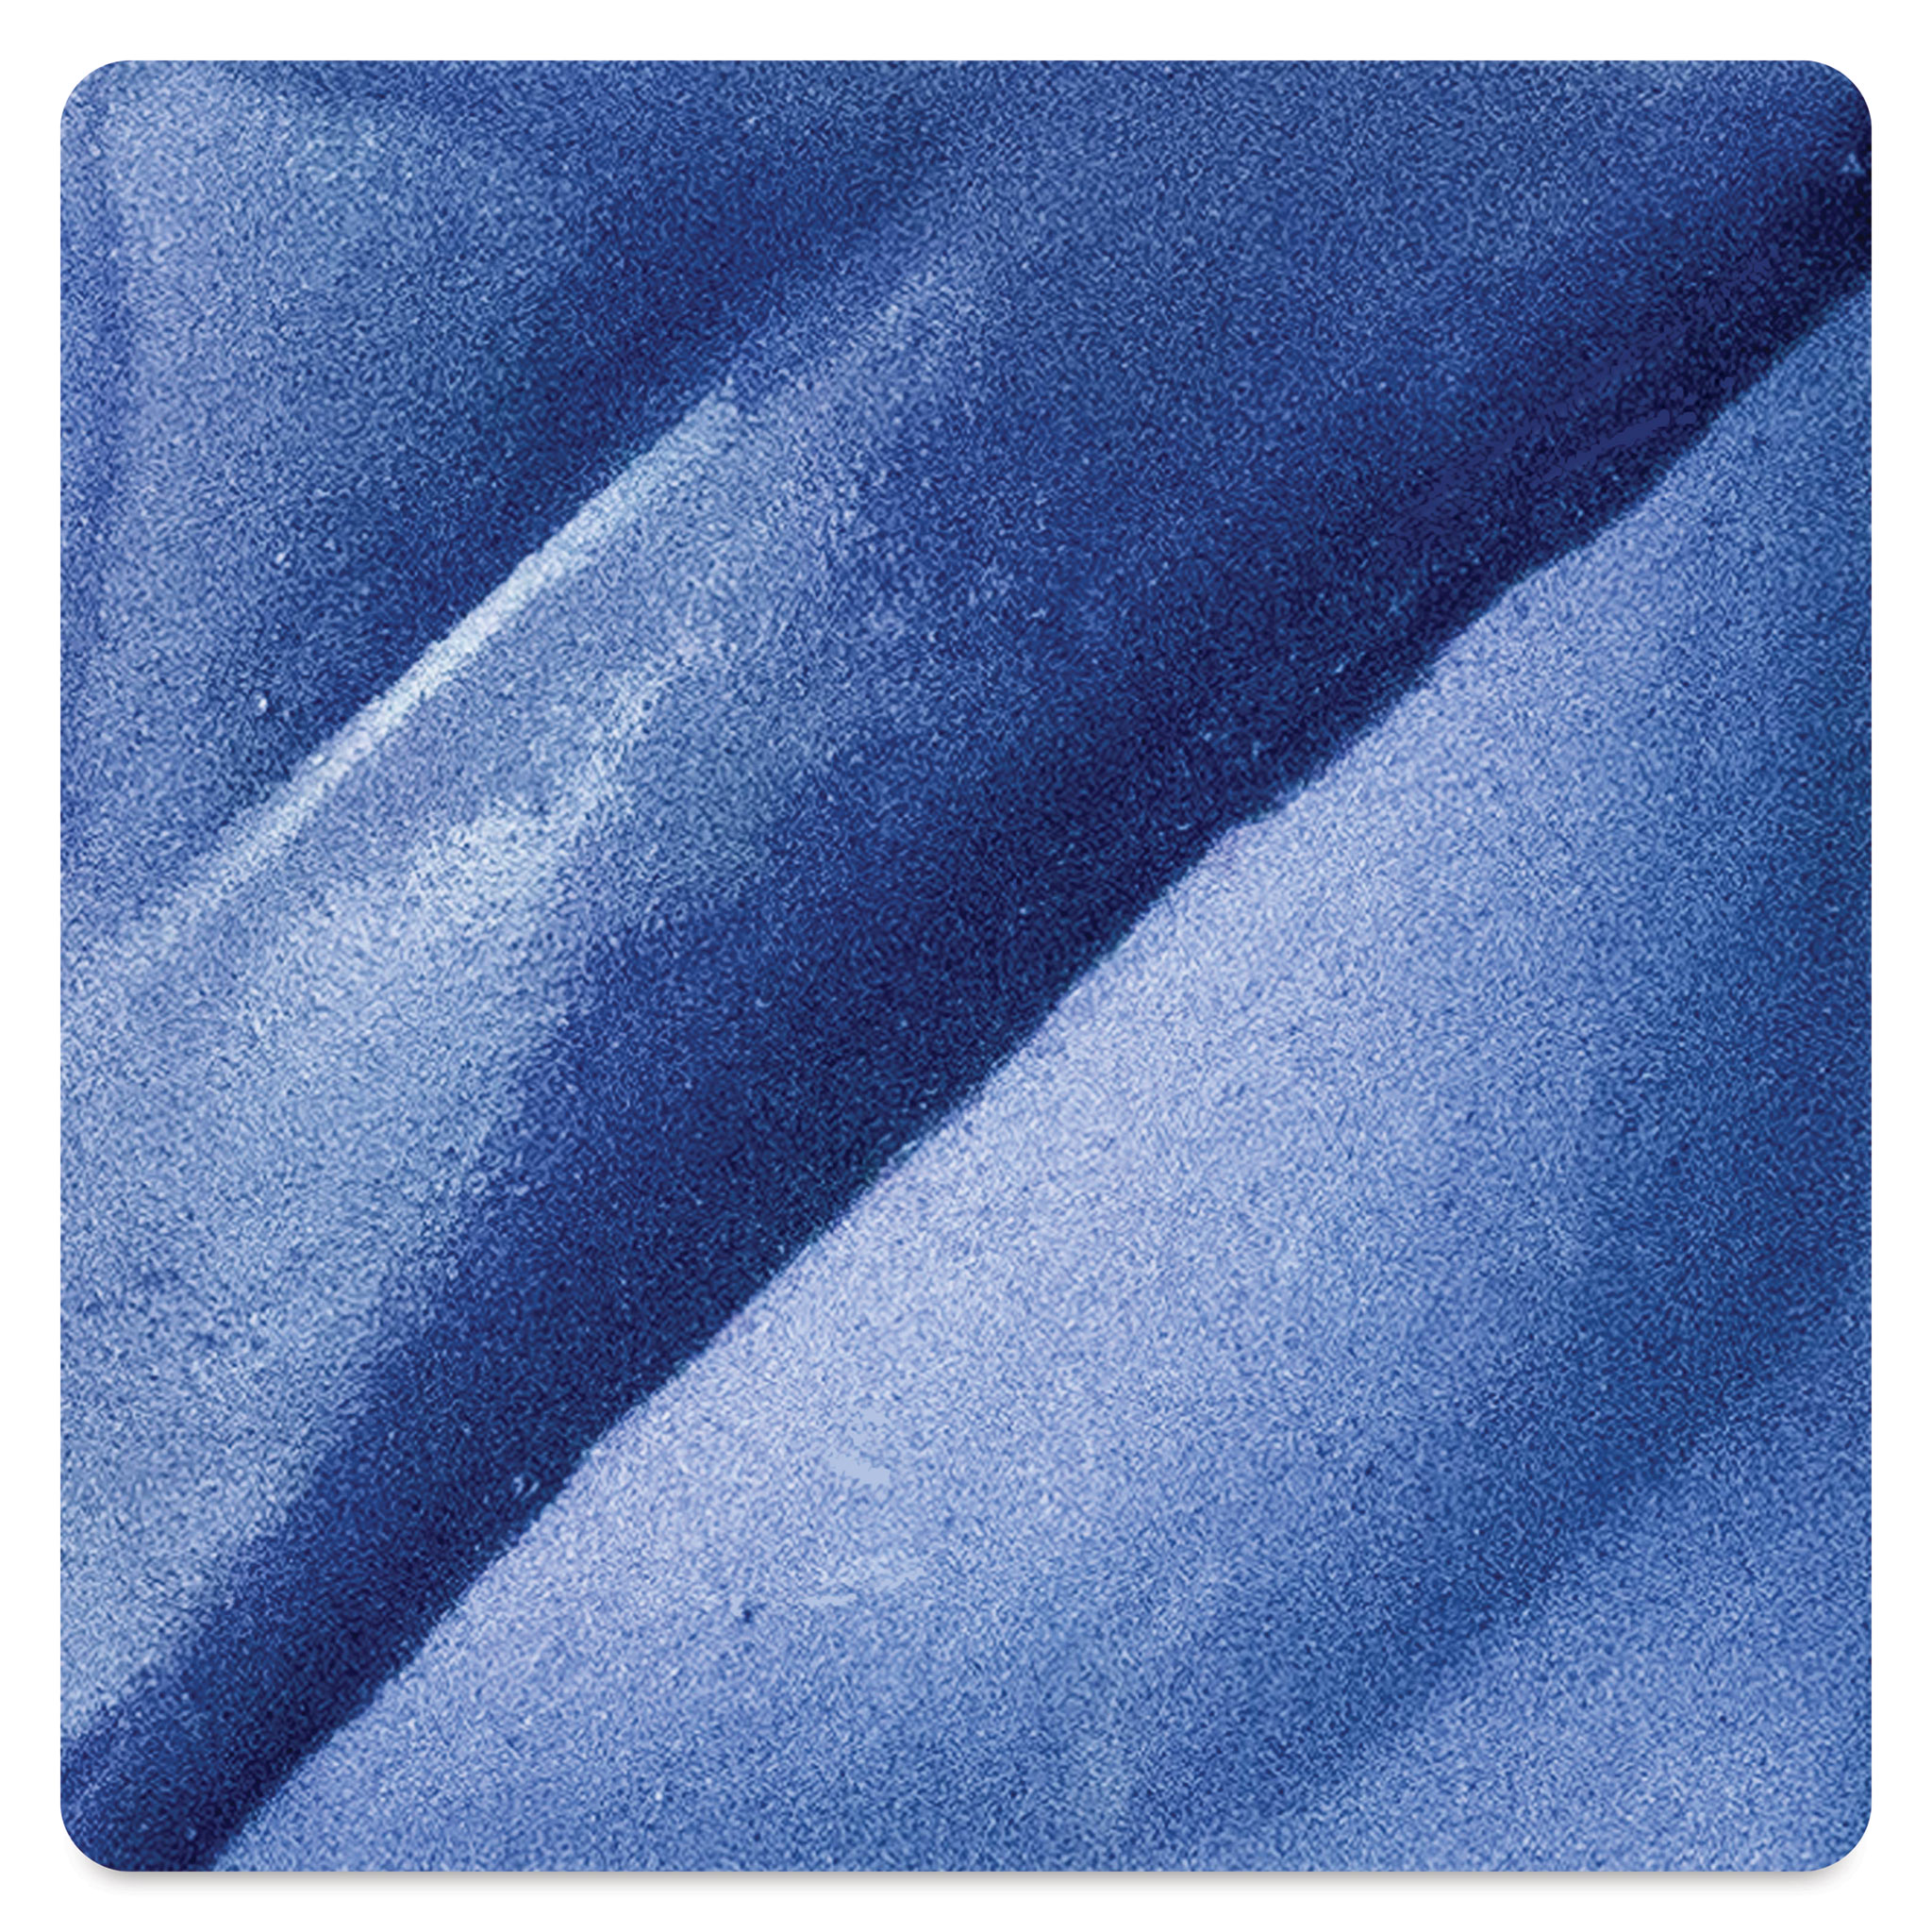 Amaco Lead-Free Velvet Underglaze - Iceberg Blue, 16 oz